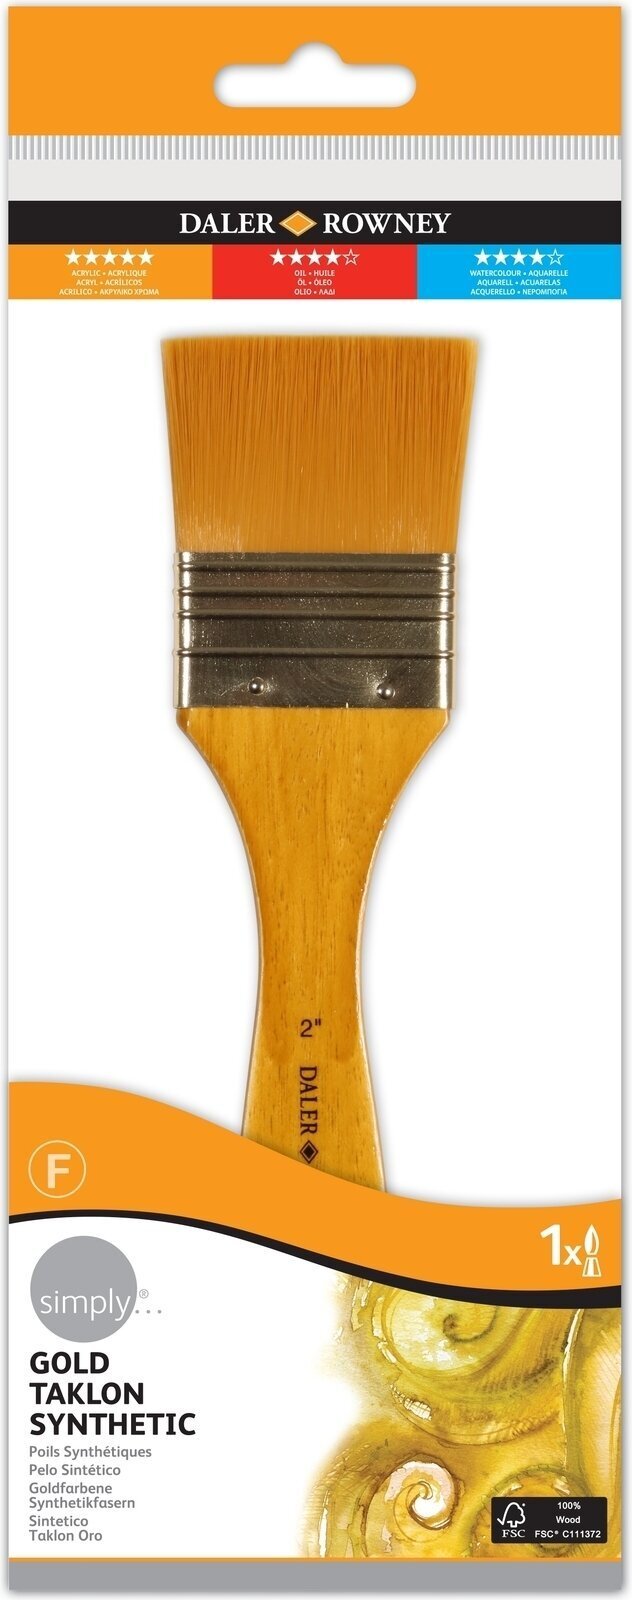 Paint Brush Daler Rowney Simply Acrylic Brush Gold Taklon Synthetic Flat Painting Brush 2 1 pc